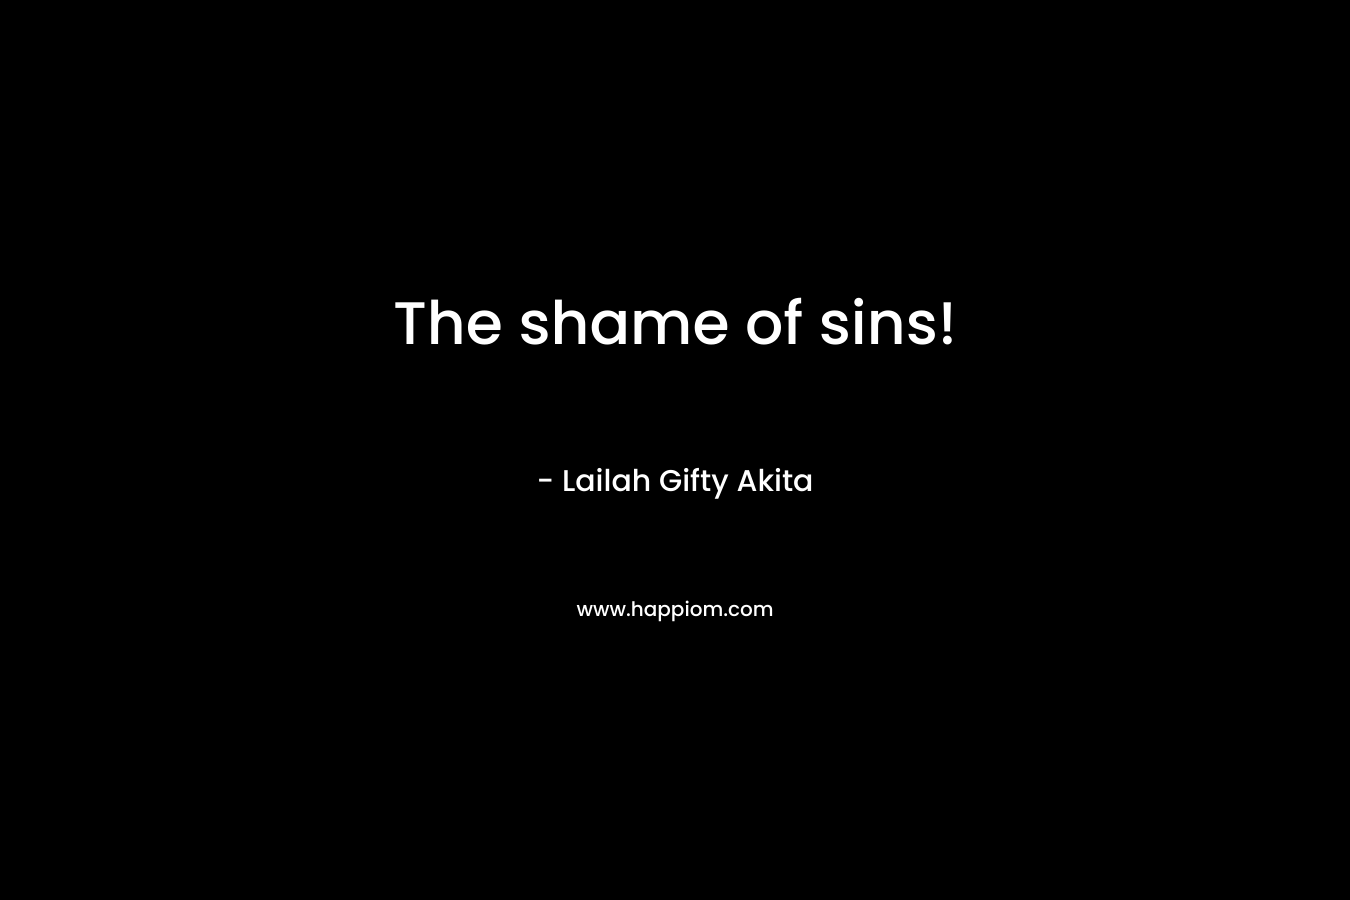 The shame of sins!